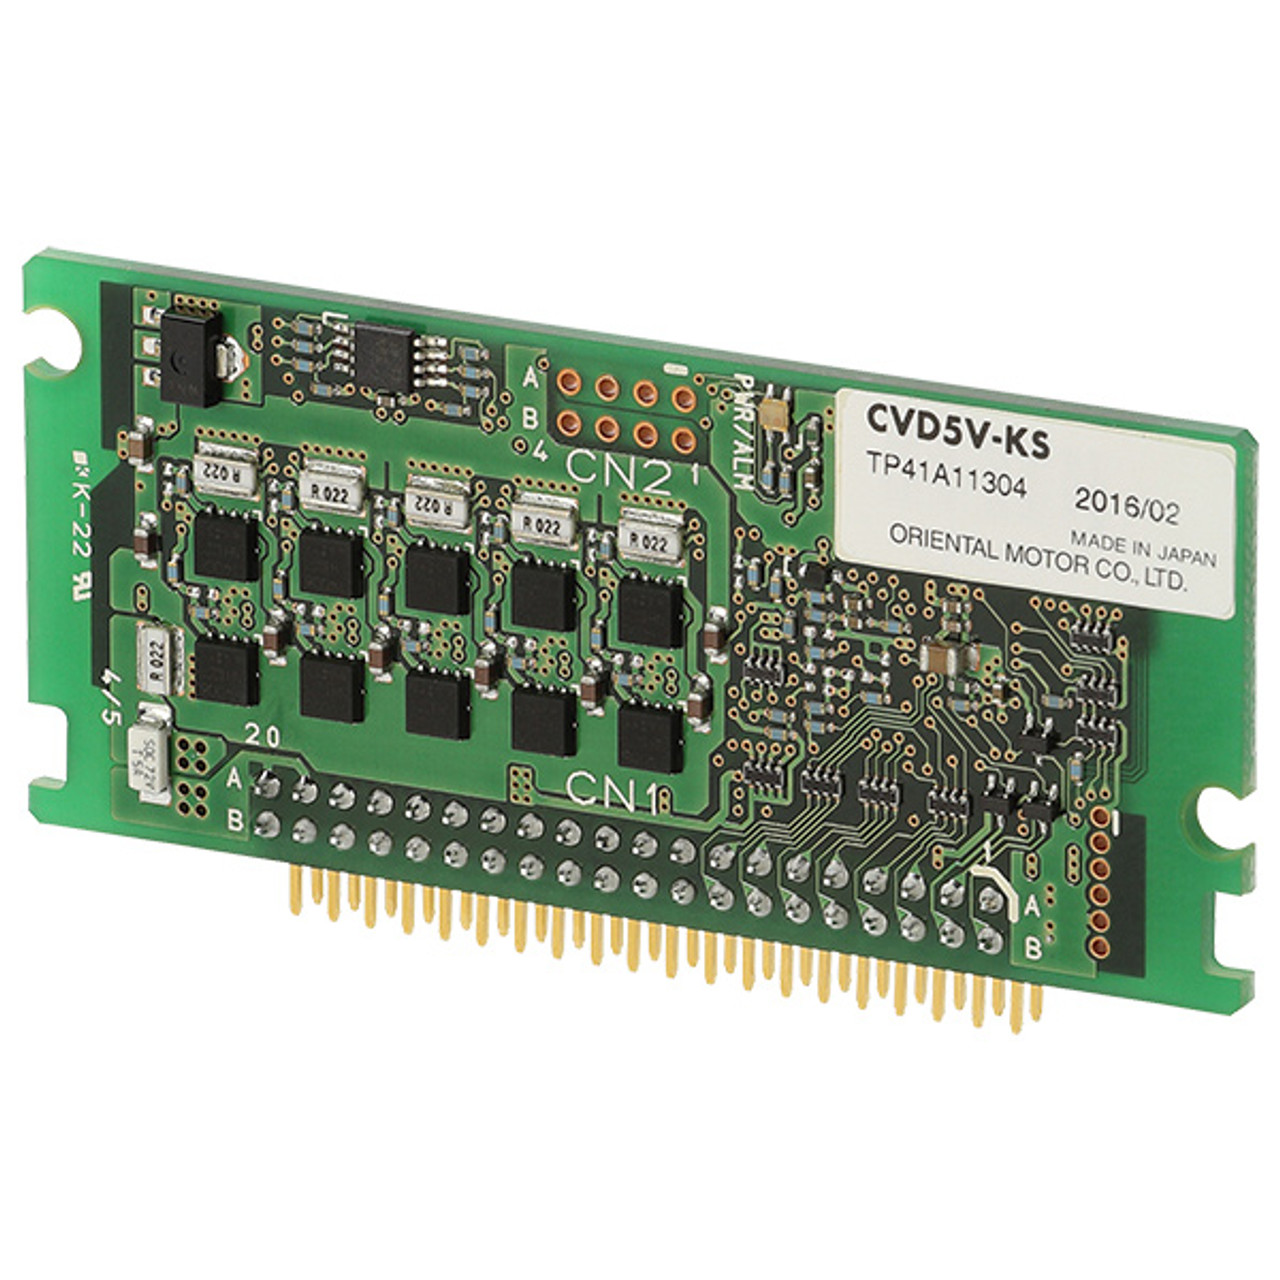 CVD5V-KS - Product Image